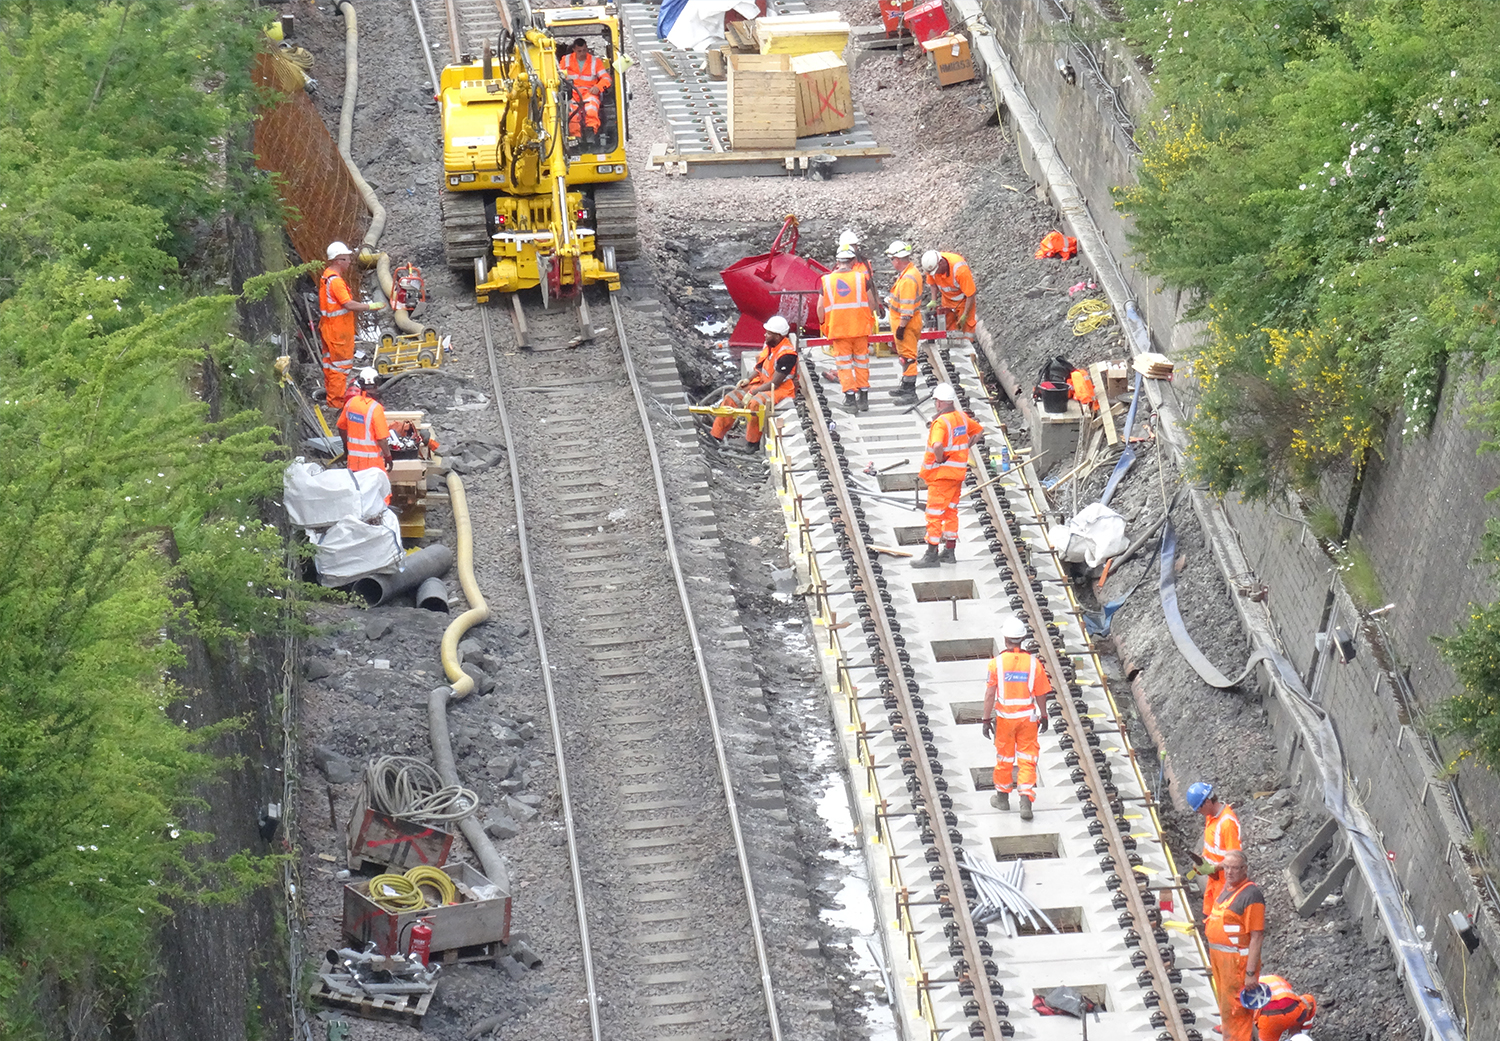 Slab Track Paving The P Way Rail Engineer